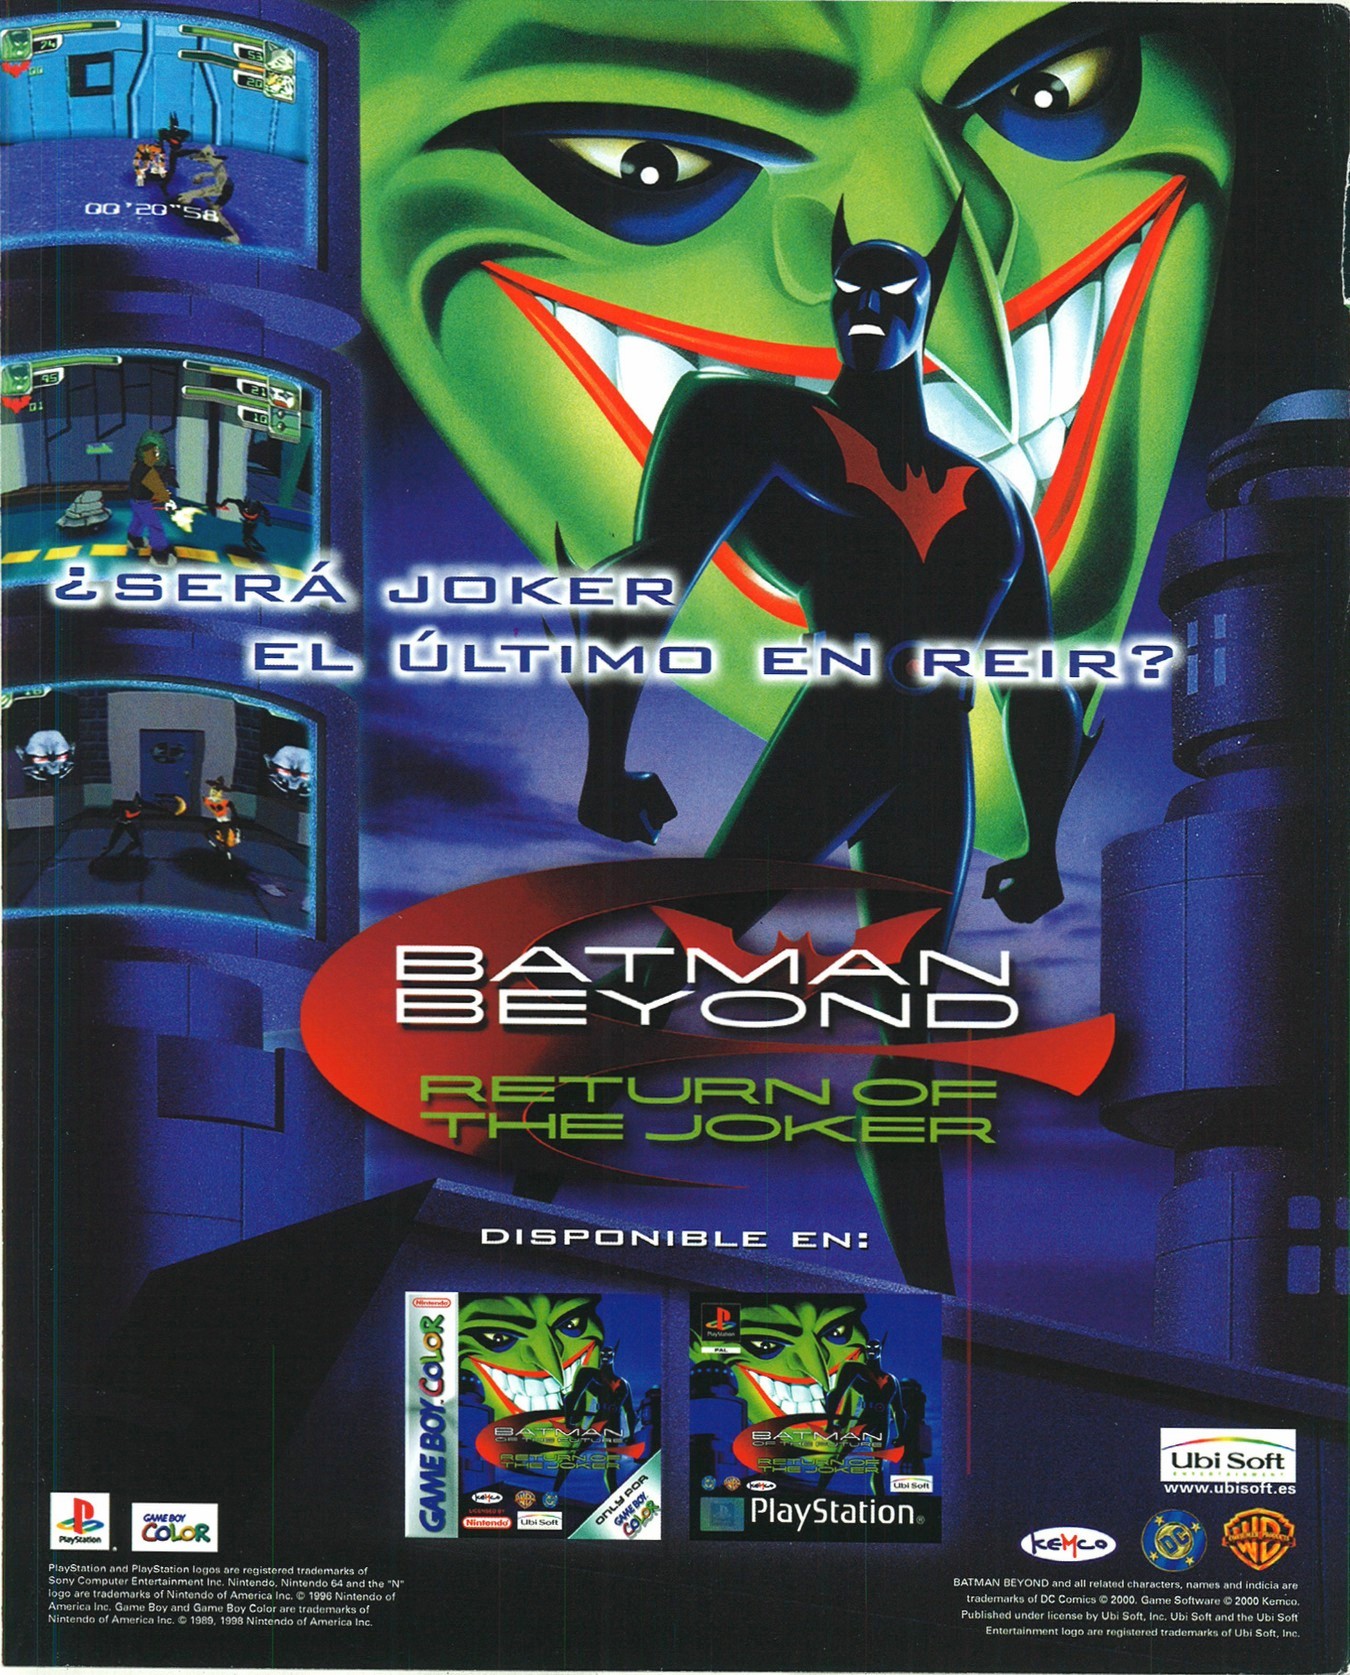 BATMAN OF THE FUTURE - RETURN OF THE JOKER (PAL) - SPANISH ADVERT